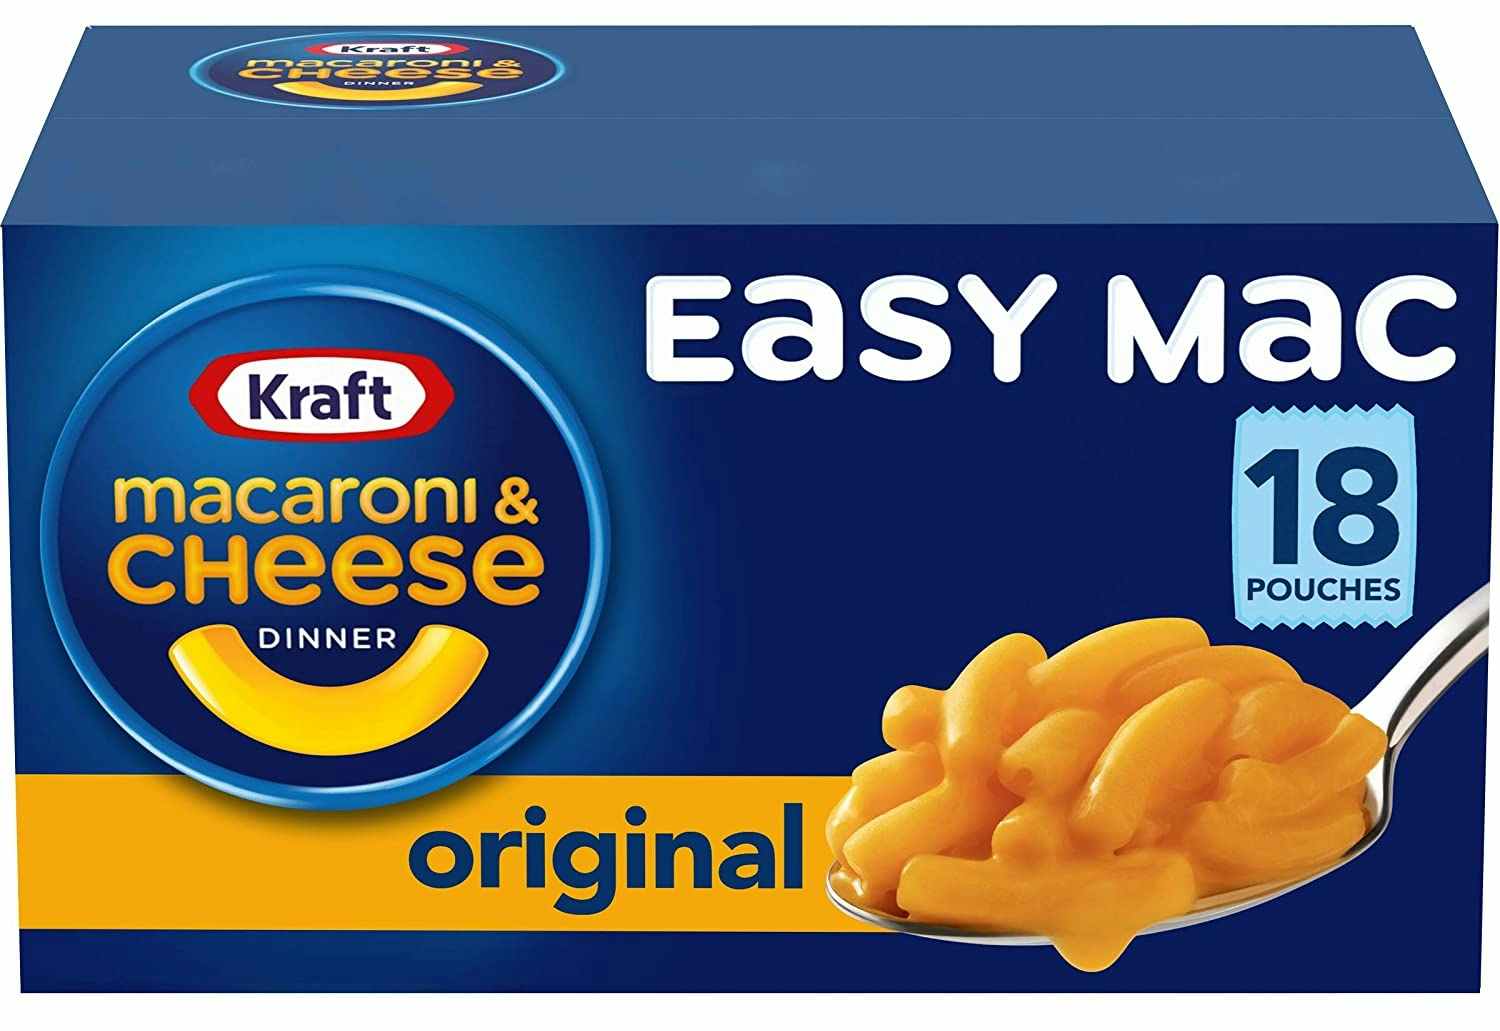 A box of Kraft Easy Mac on a white background.